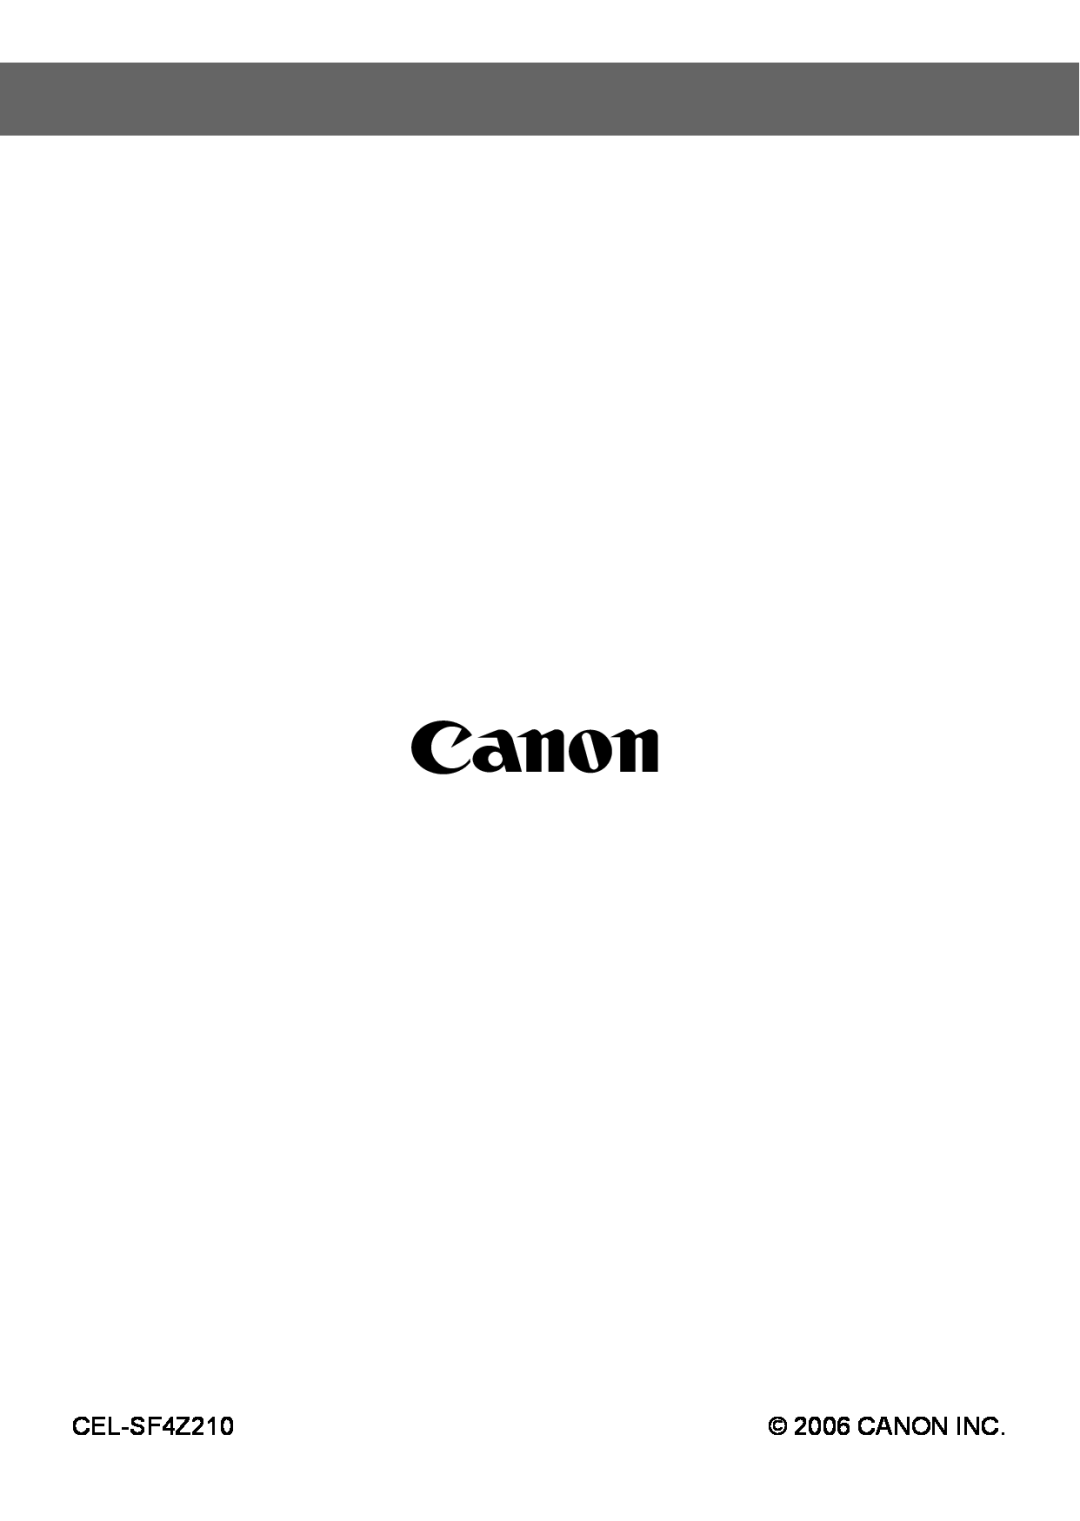 Canon A540 appendix CEL-SF4Z210, Canon Inc 